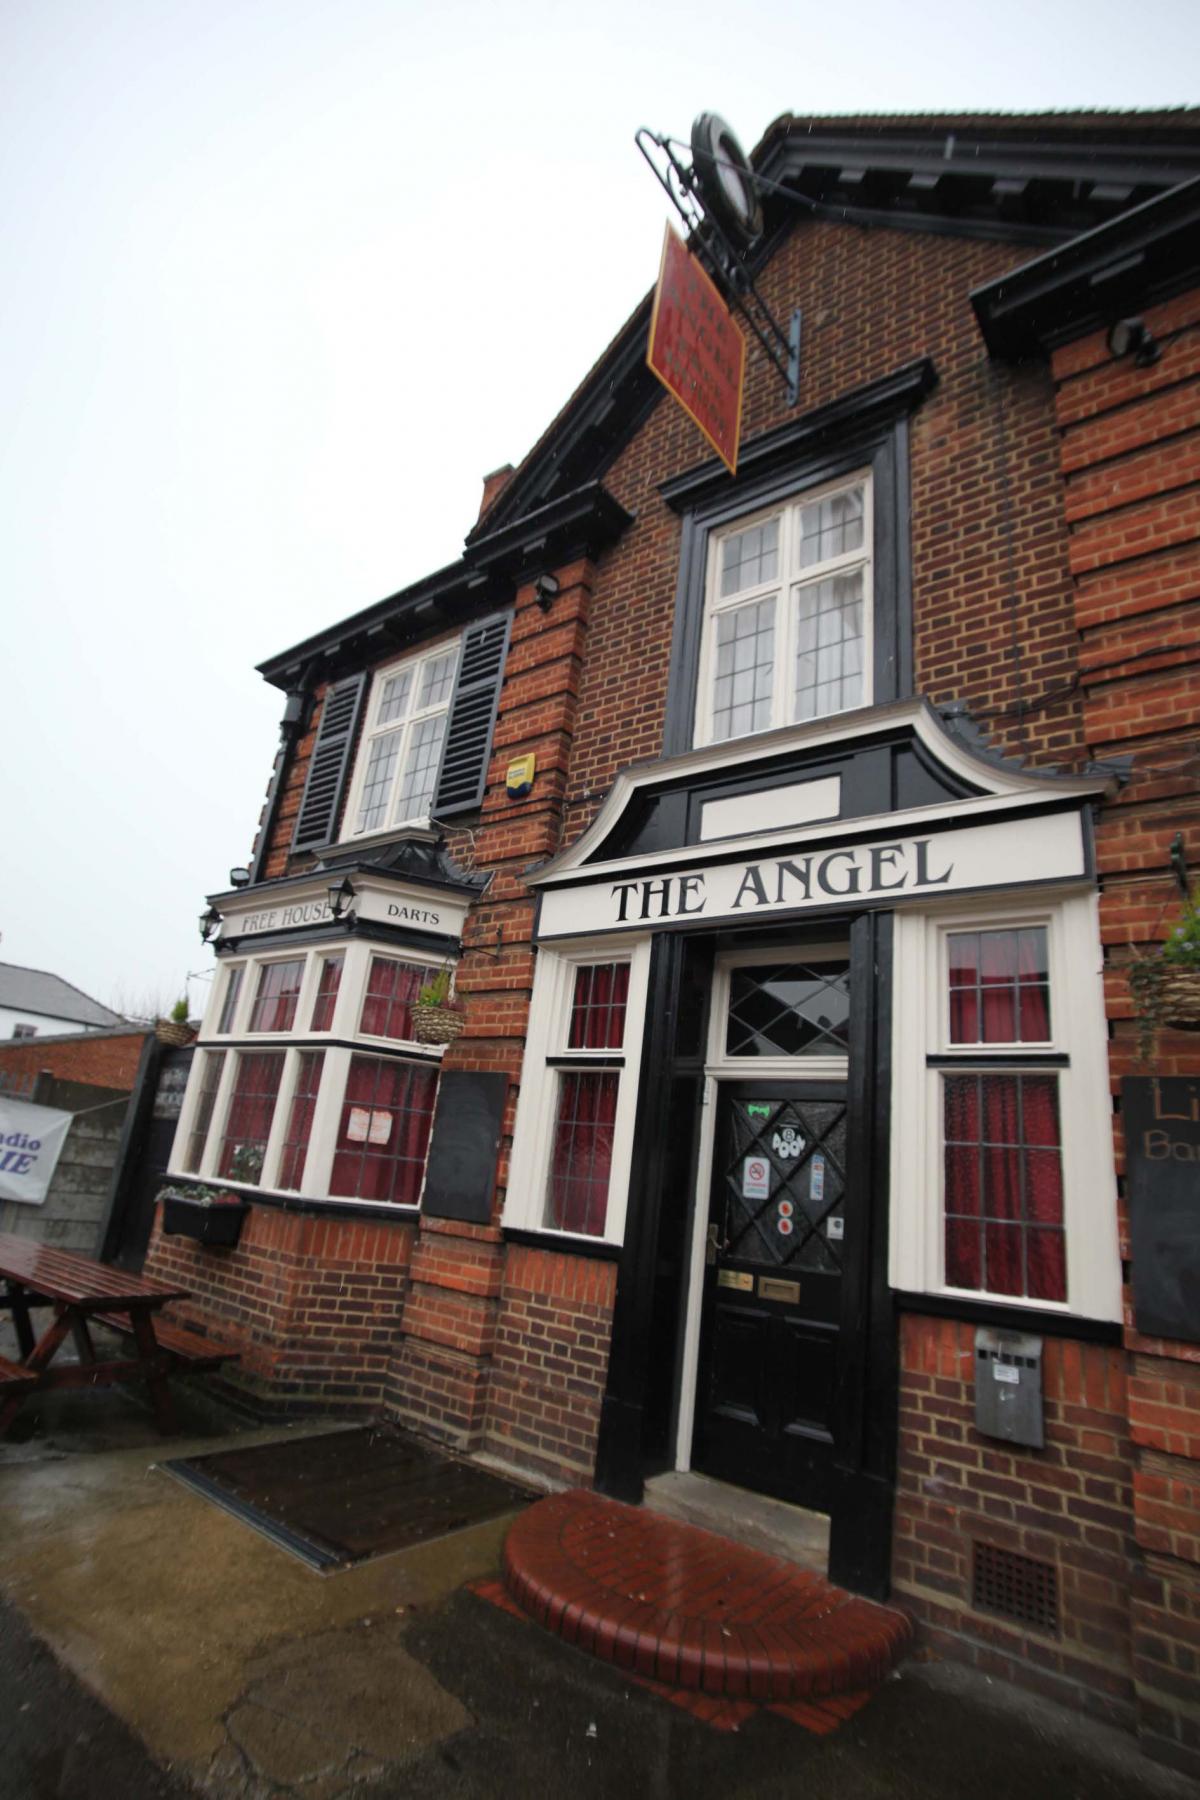 The Angel in Howard Road, Berrylands, Surbiton was shut after a police raid in 2010 found an antique shotgun  upstairs